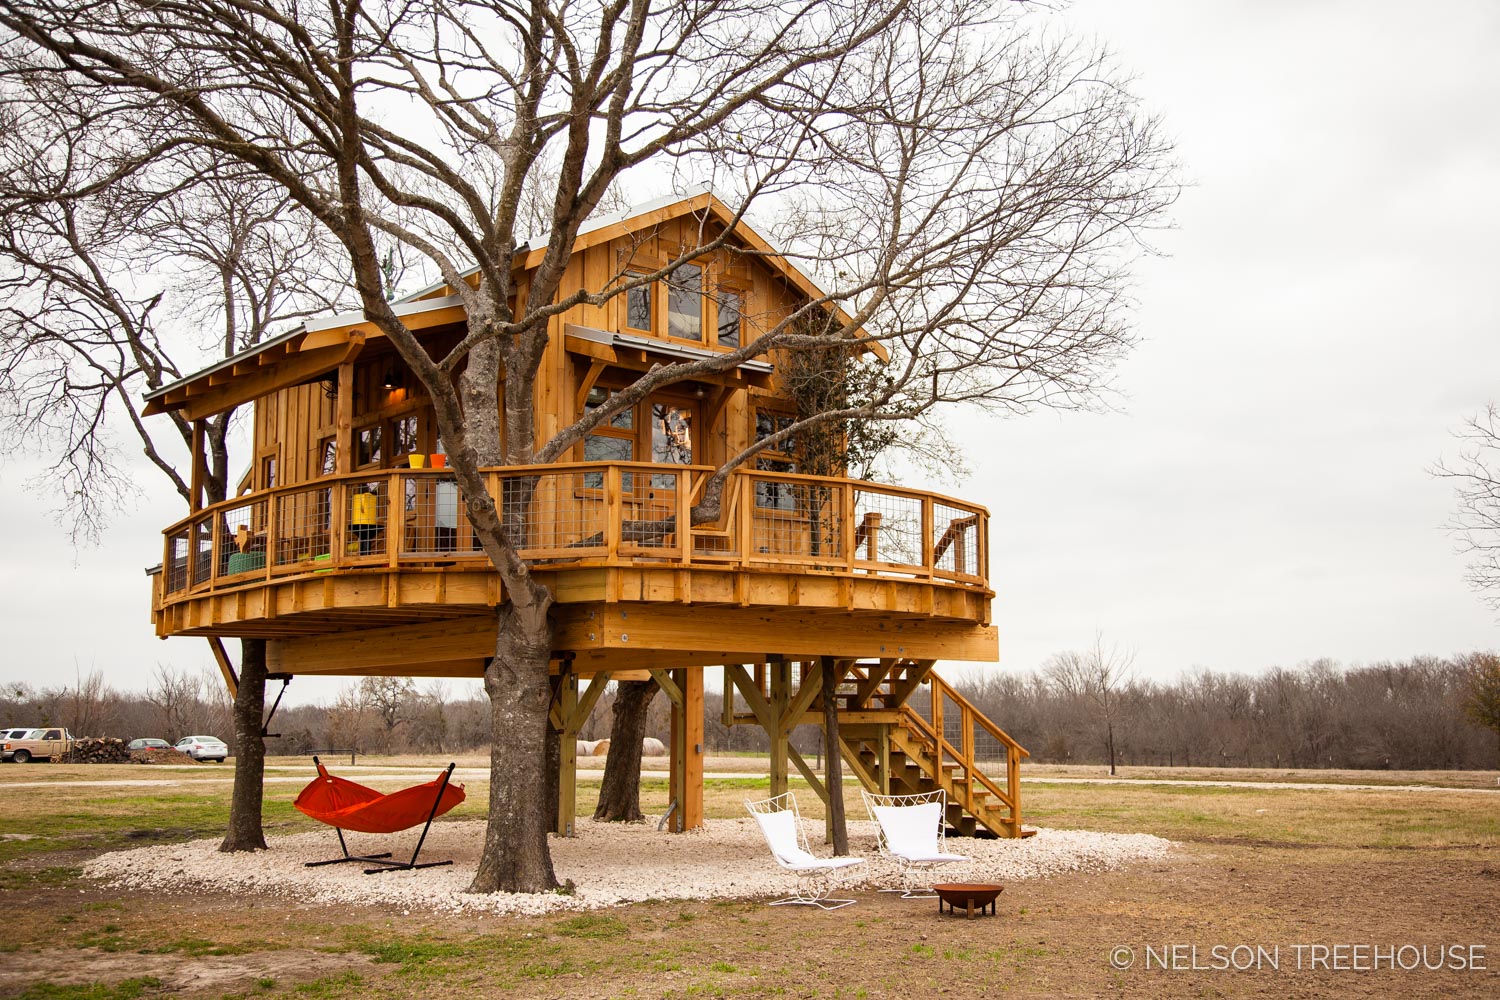  Nelson Treehouse - Twenty-Ton Texas Treehouse base 